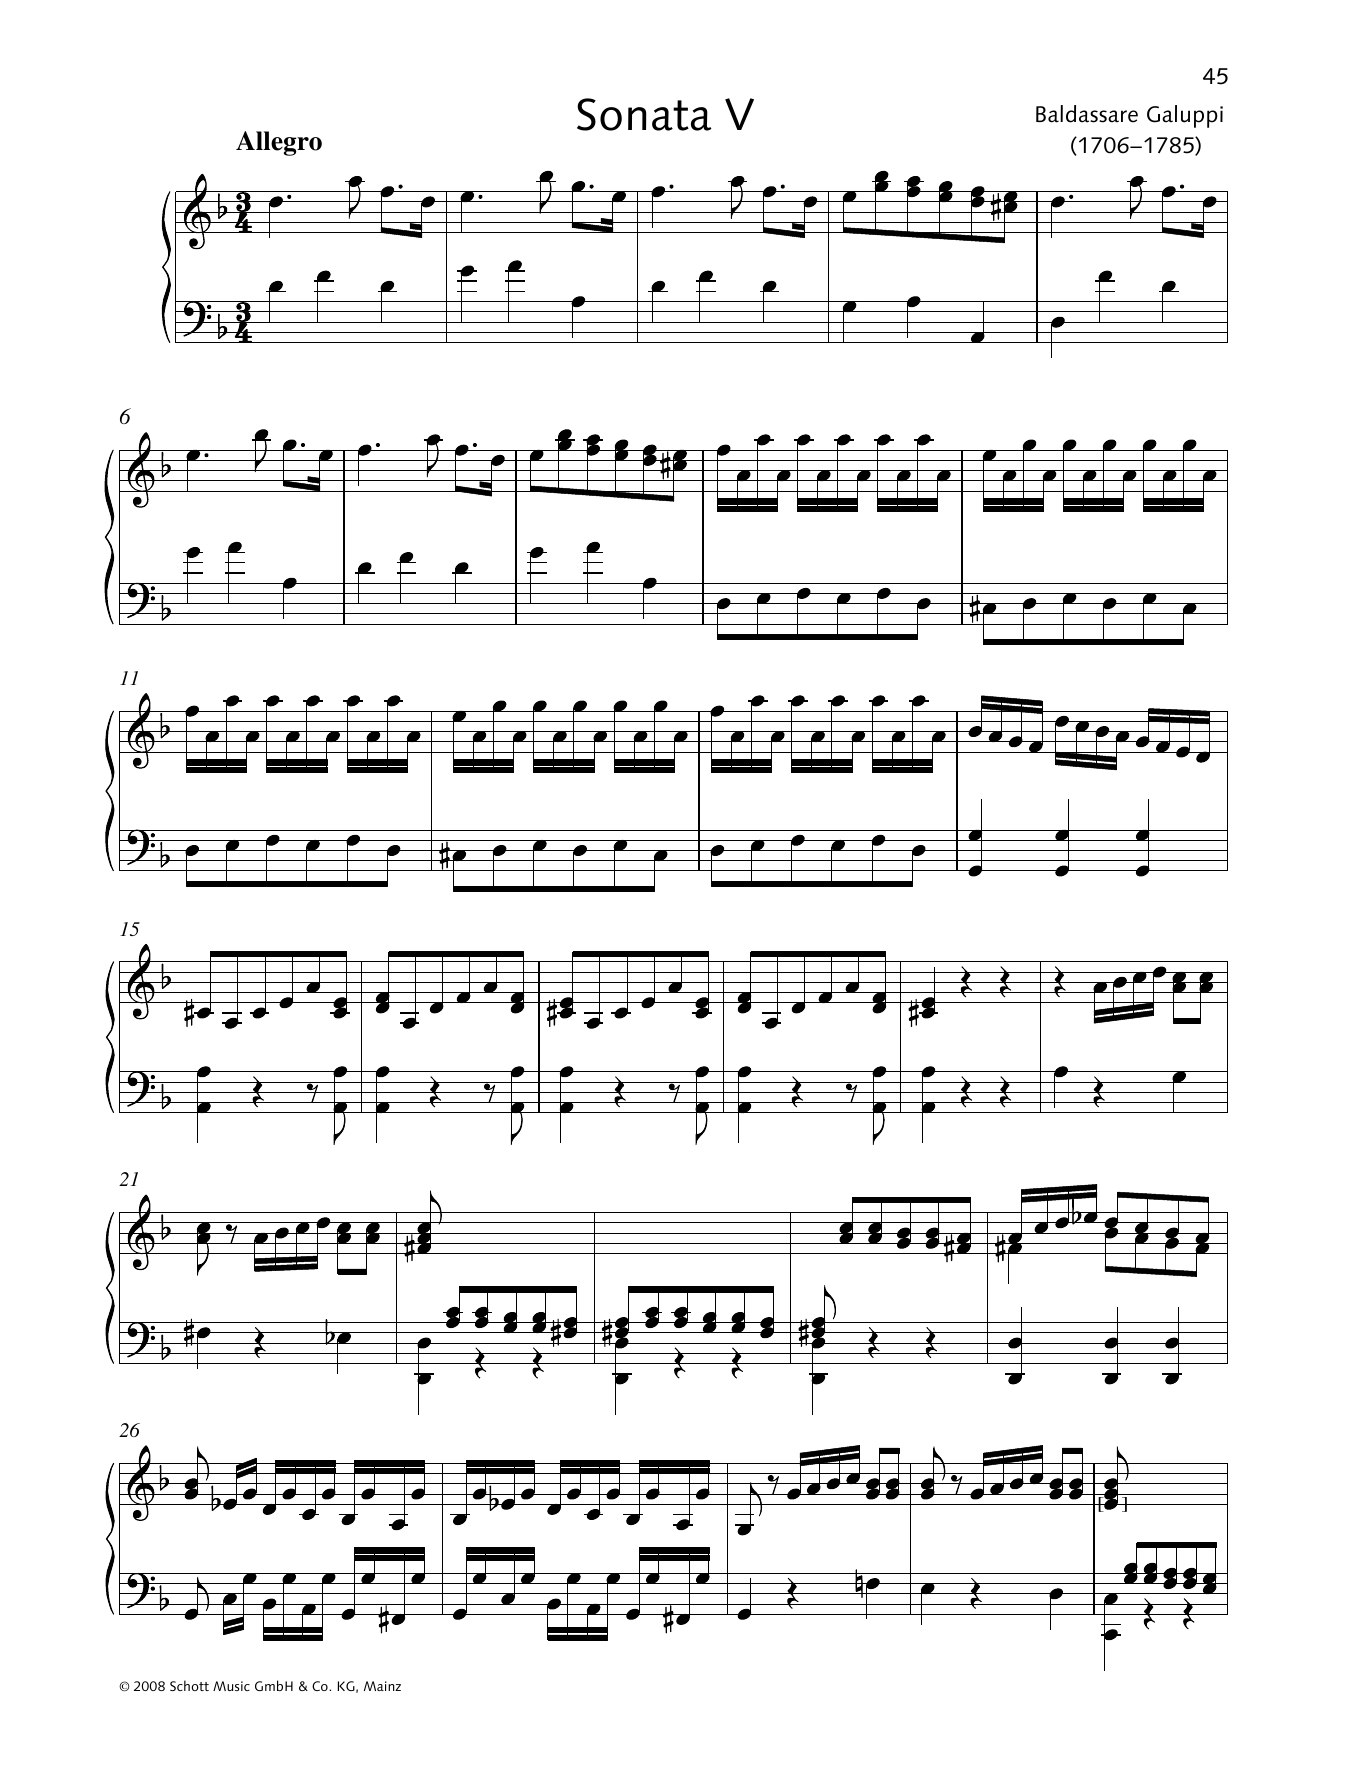 Download Baldassare Galuppi Sonata V D minor Sheet Music